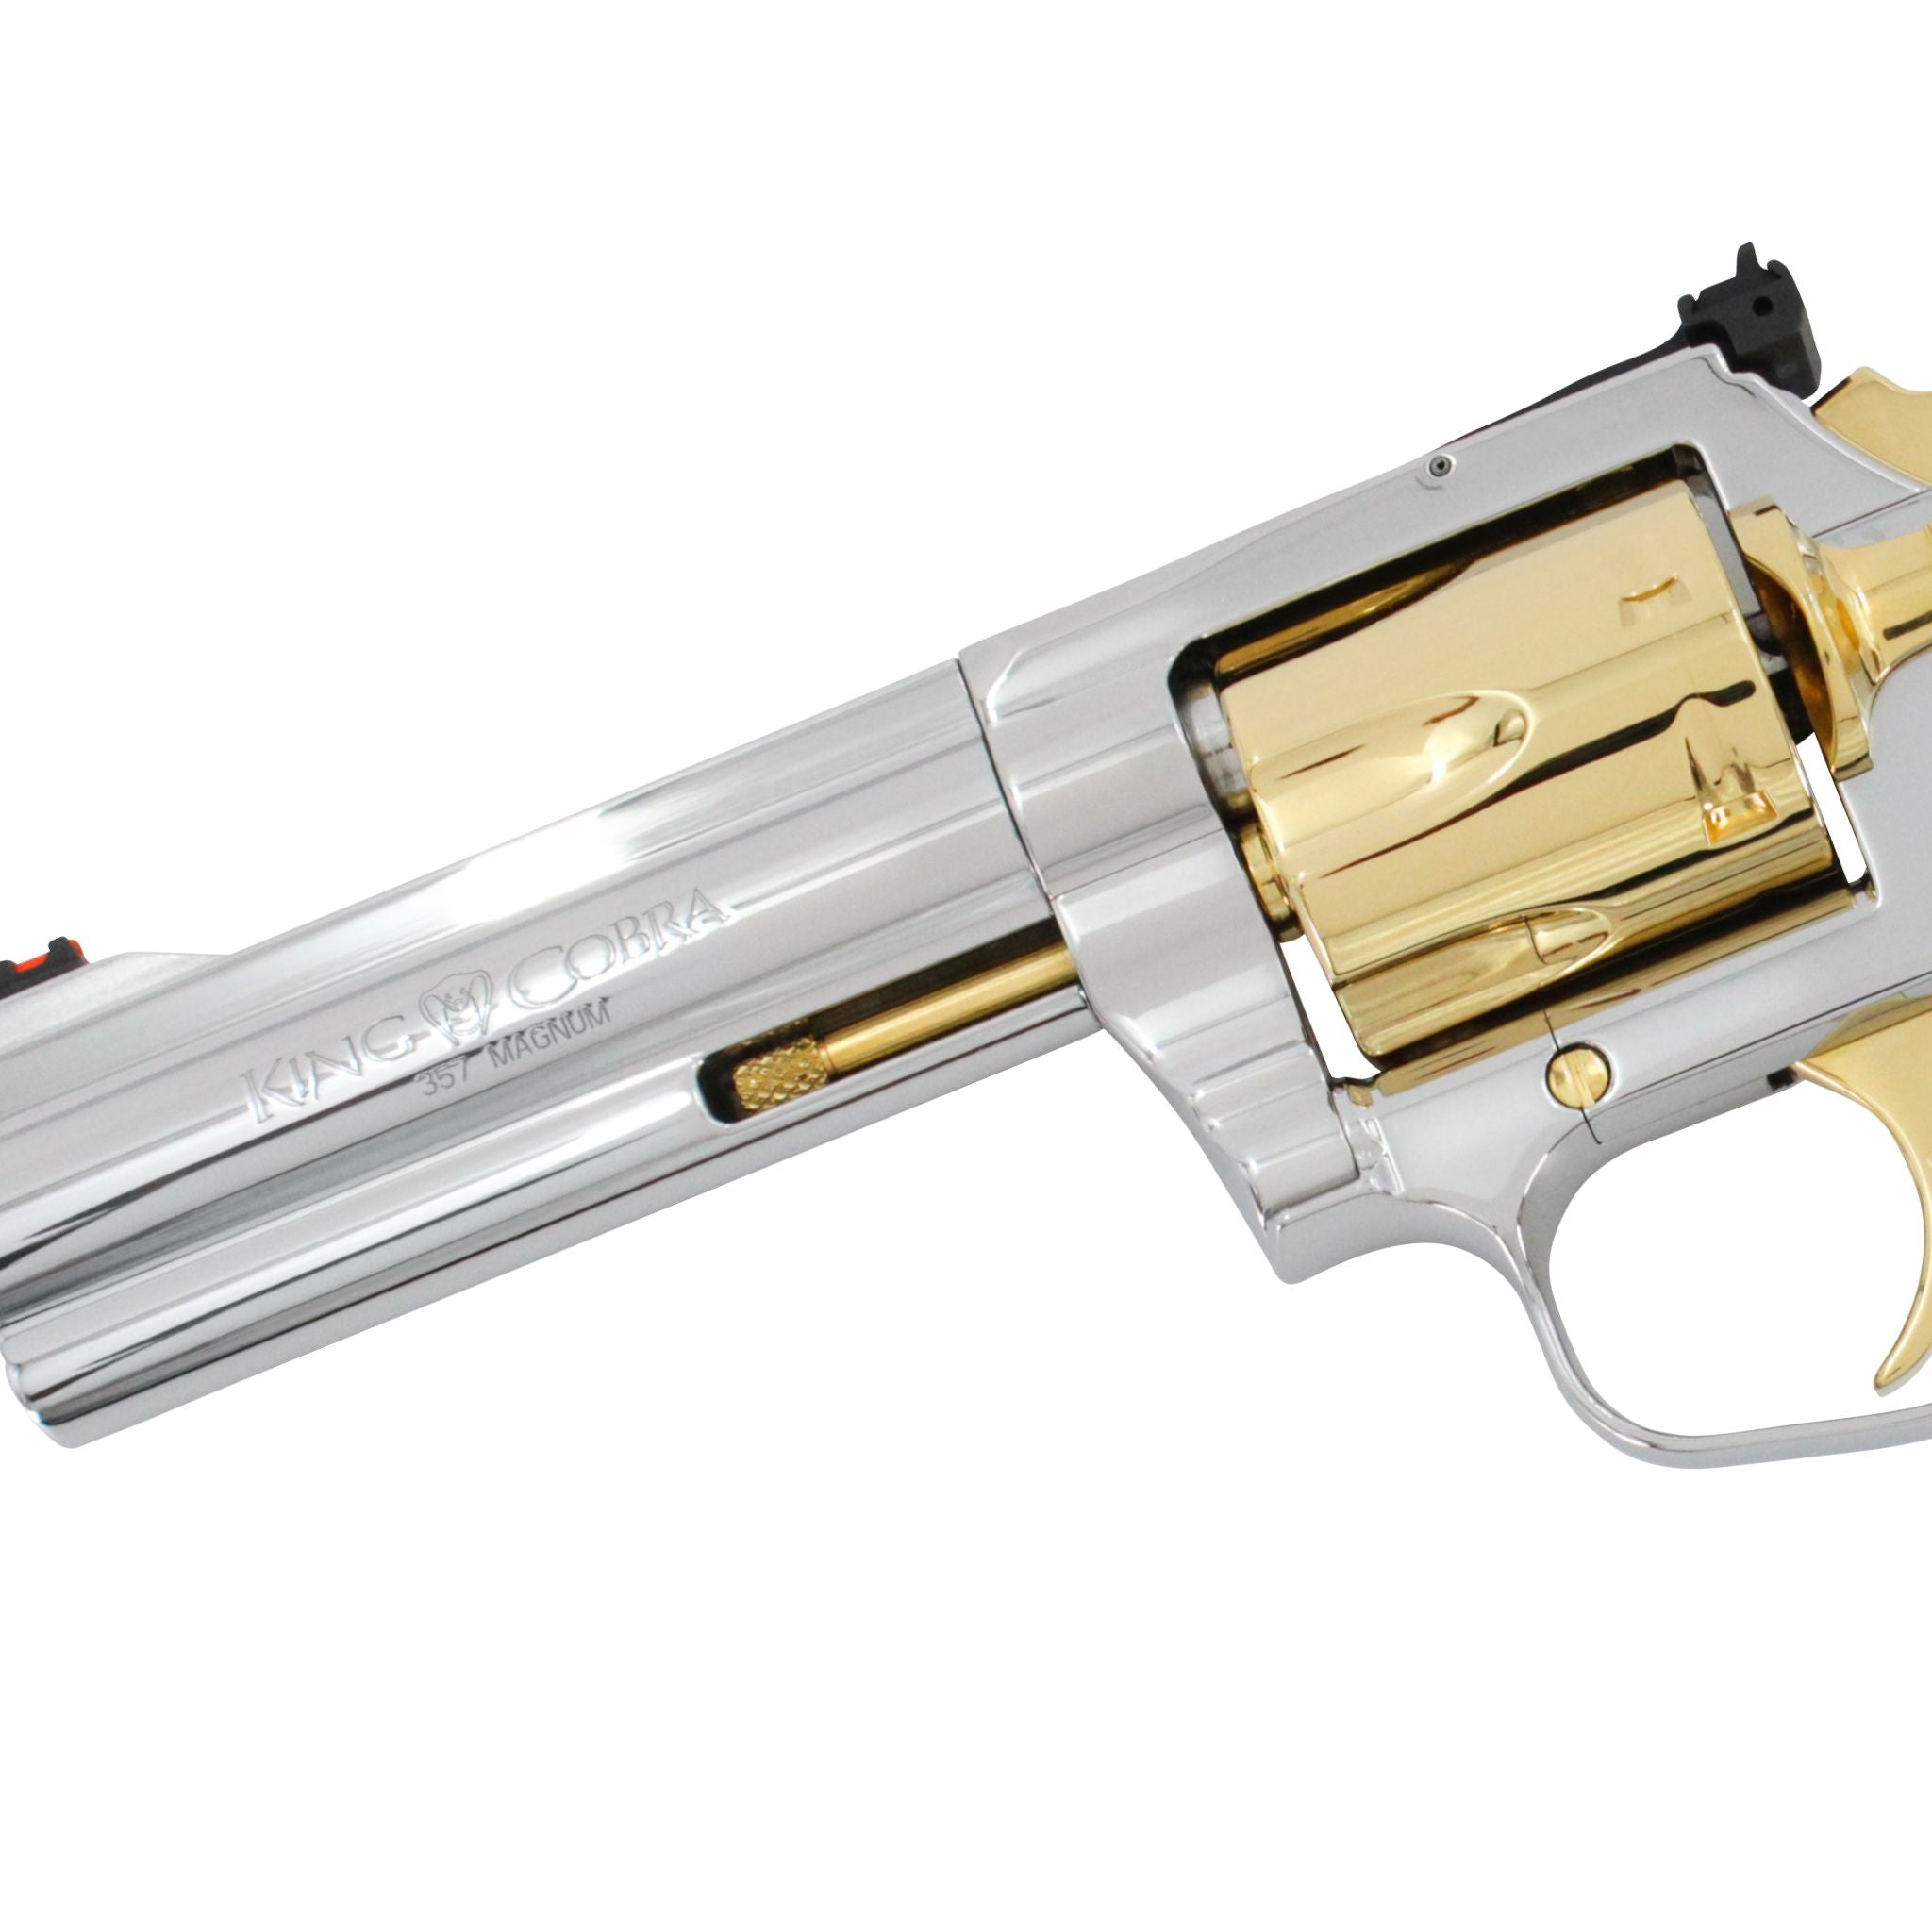 Colt King Cobra Target, 4", 357 Magnum High Polished Stainless Steel with 24 karat Gold Accents SKU: 4946750308454, Gold Gun, gold firearm